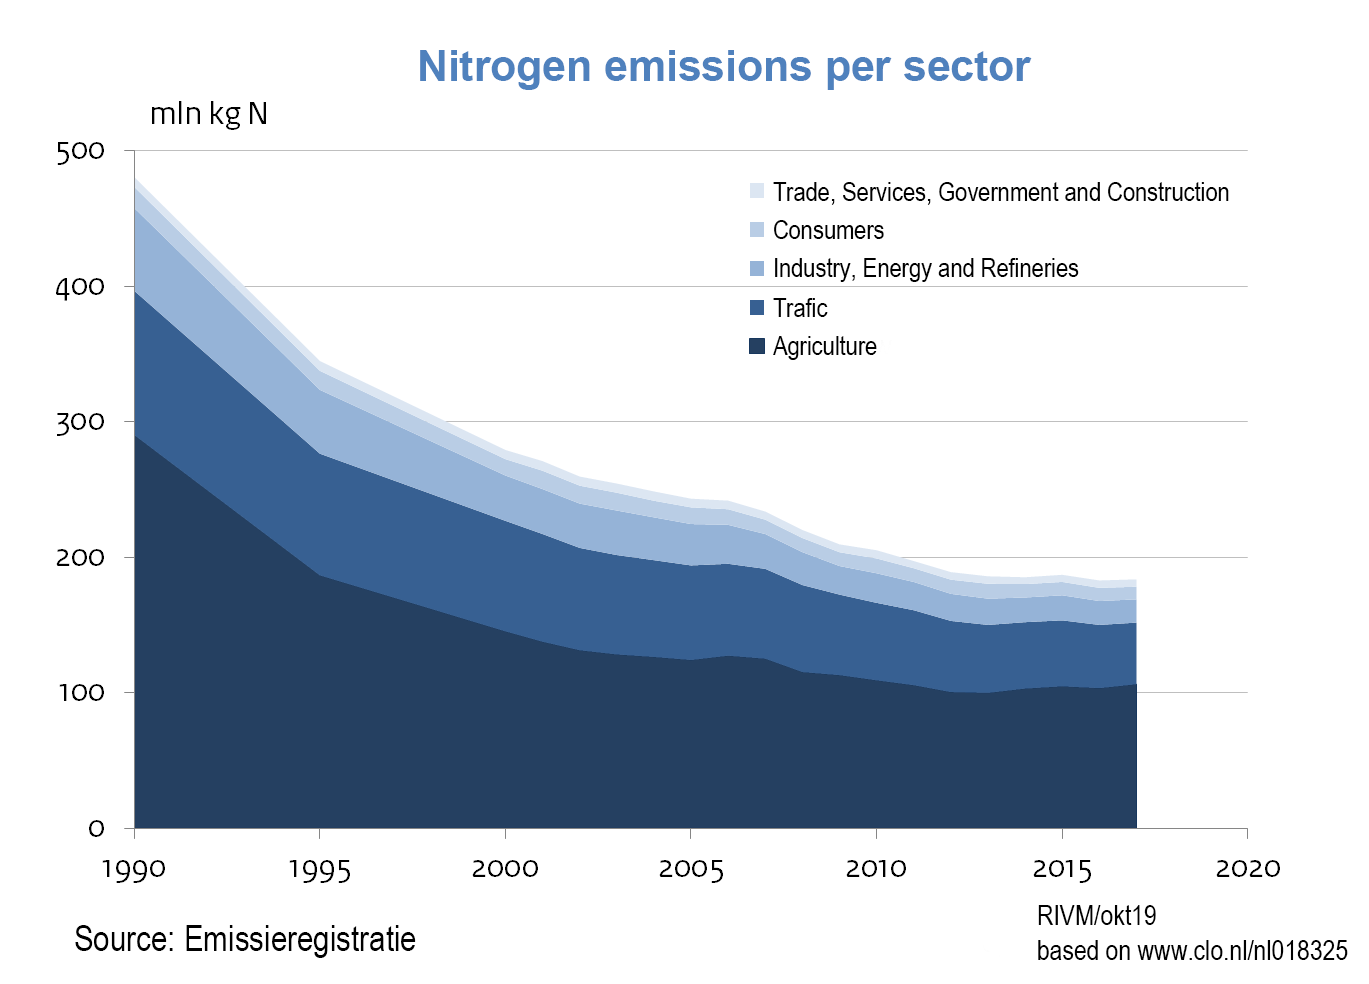 Dutch nitrogen emissions per sector over time.